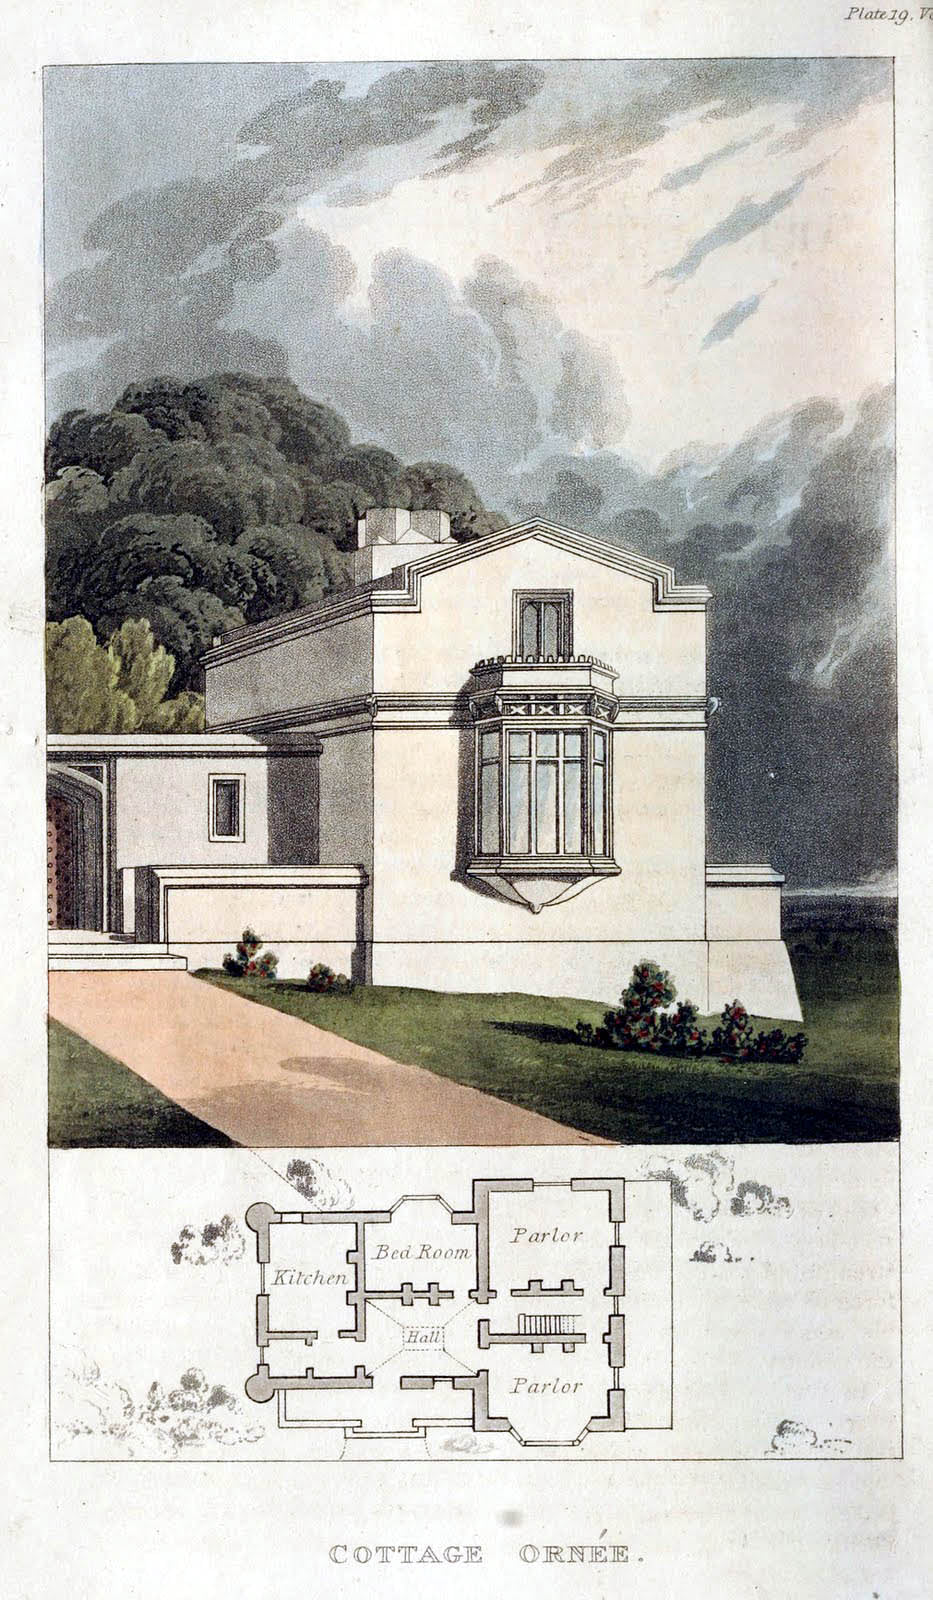 Depósito de Ackermann - 1816 Cottage Ornee placa 19